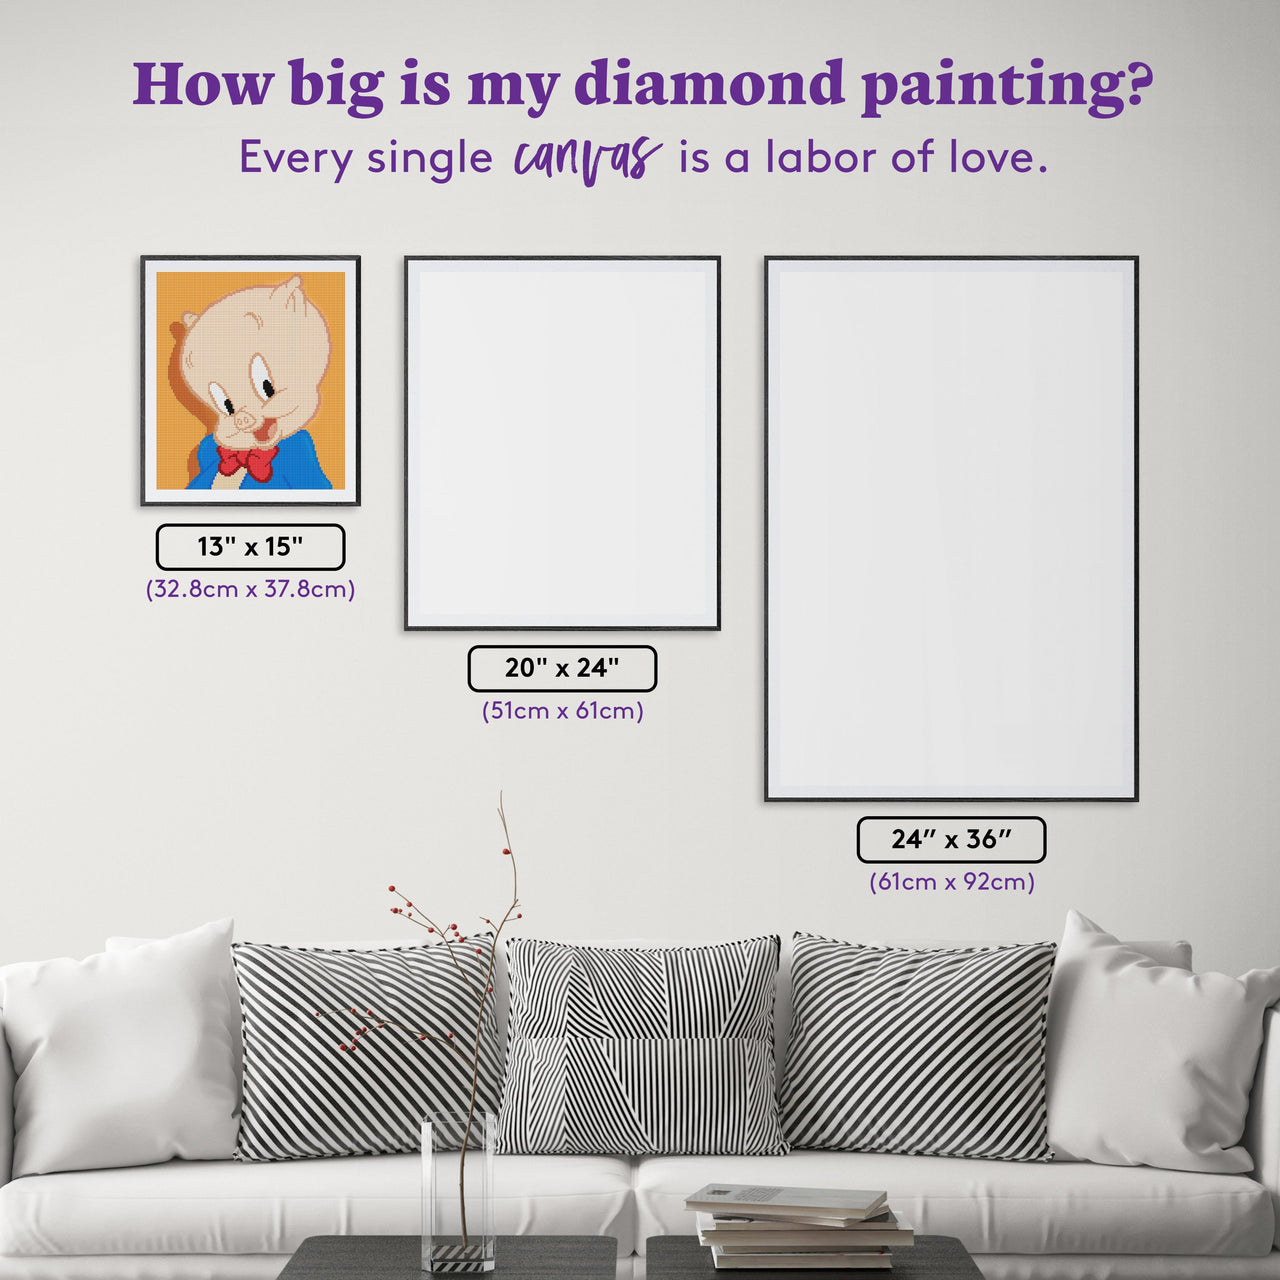 Diamond Painting Porky Pig™ 13" x 15" (32.8cm x 37.8cm) / Round With 12 Colors Including 1 Fairy Dust Diamonds / 15,795